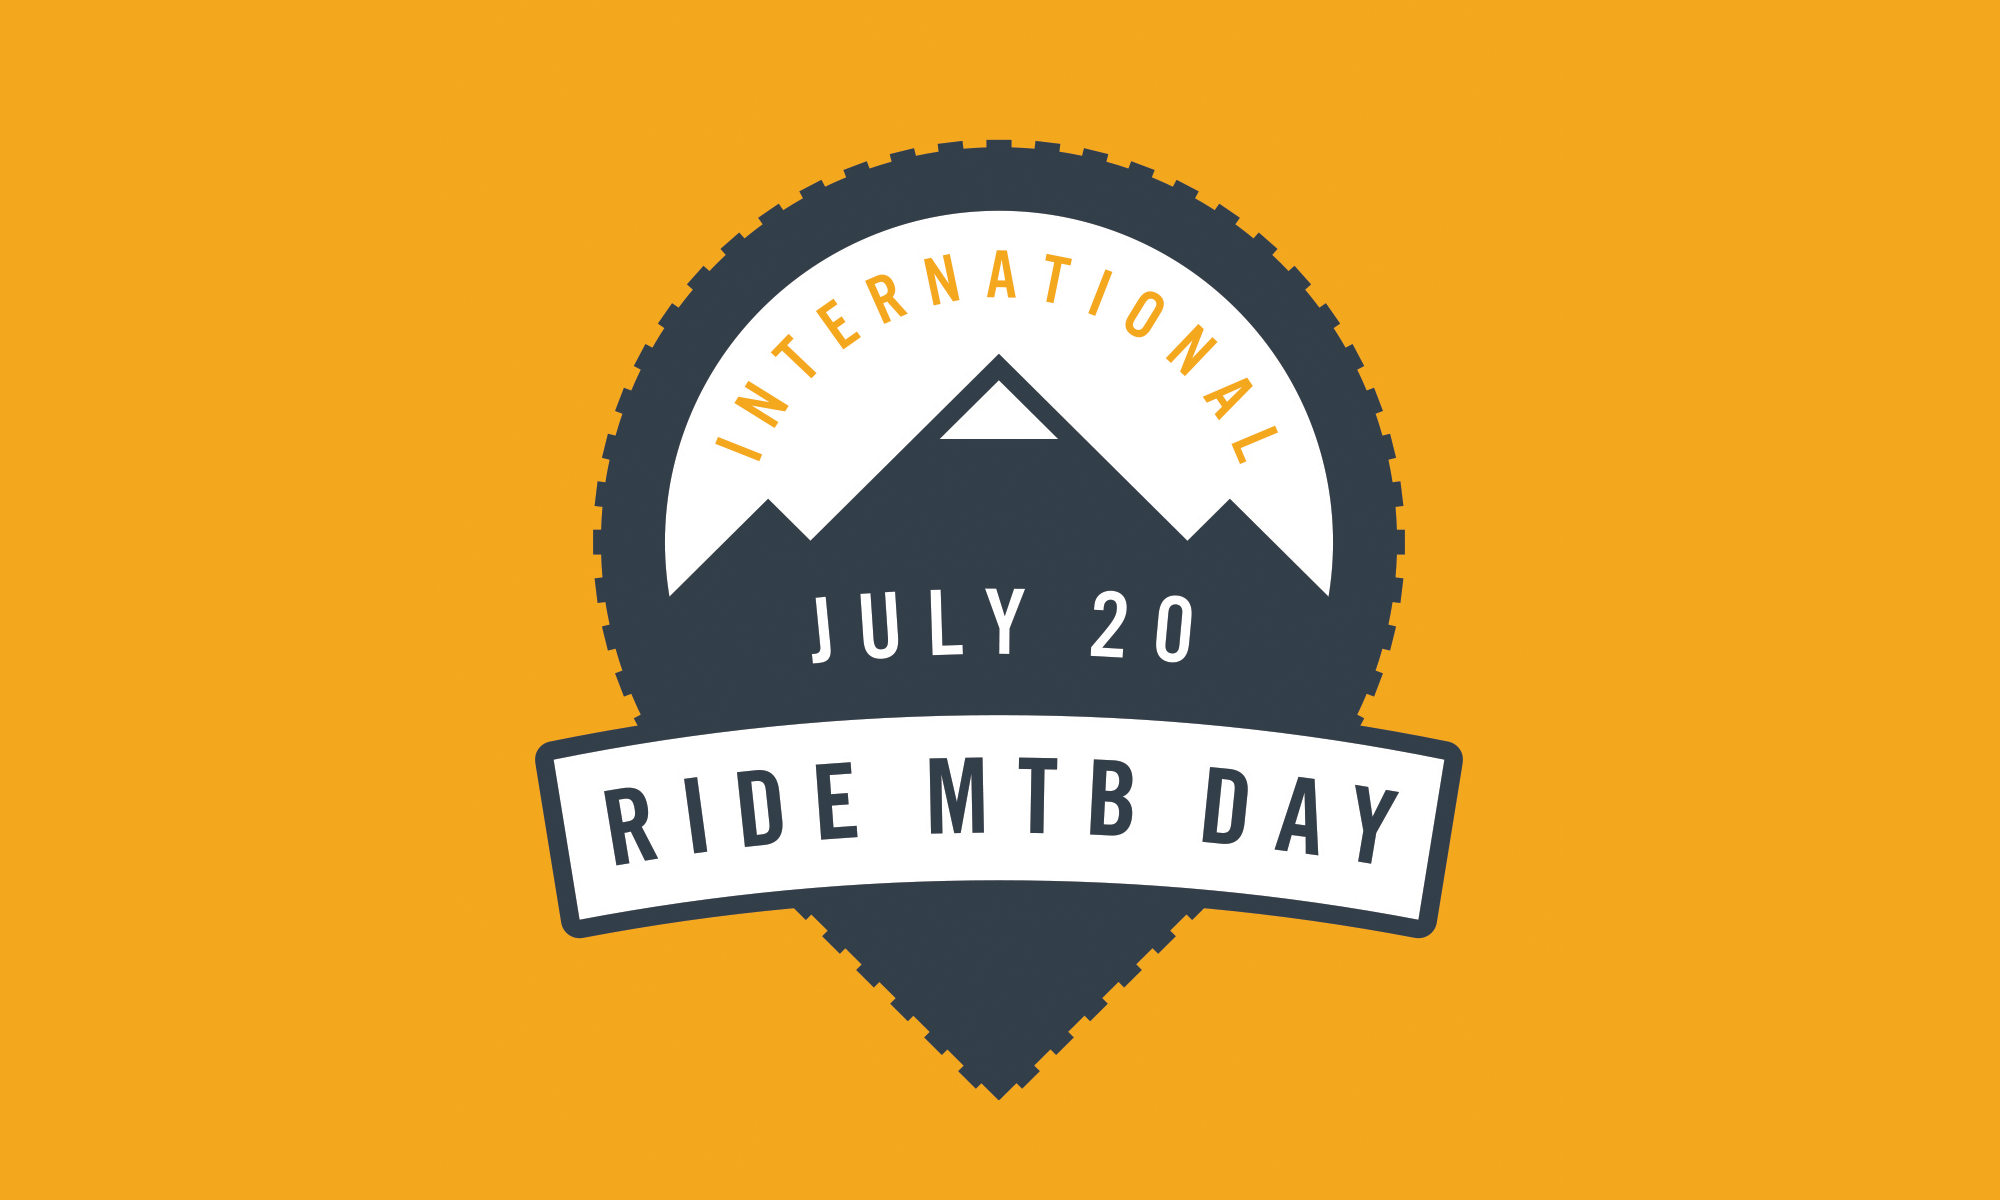 Ride MTB Day